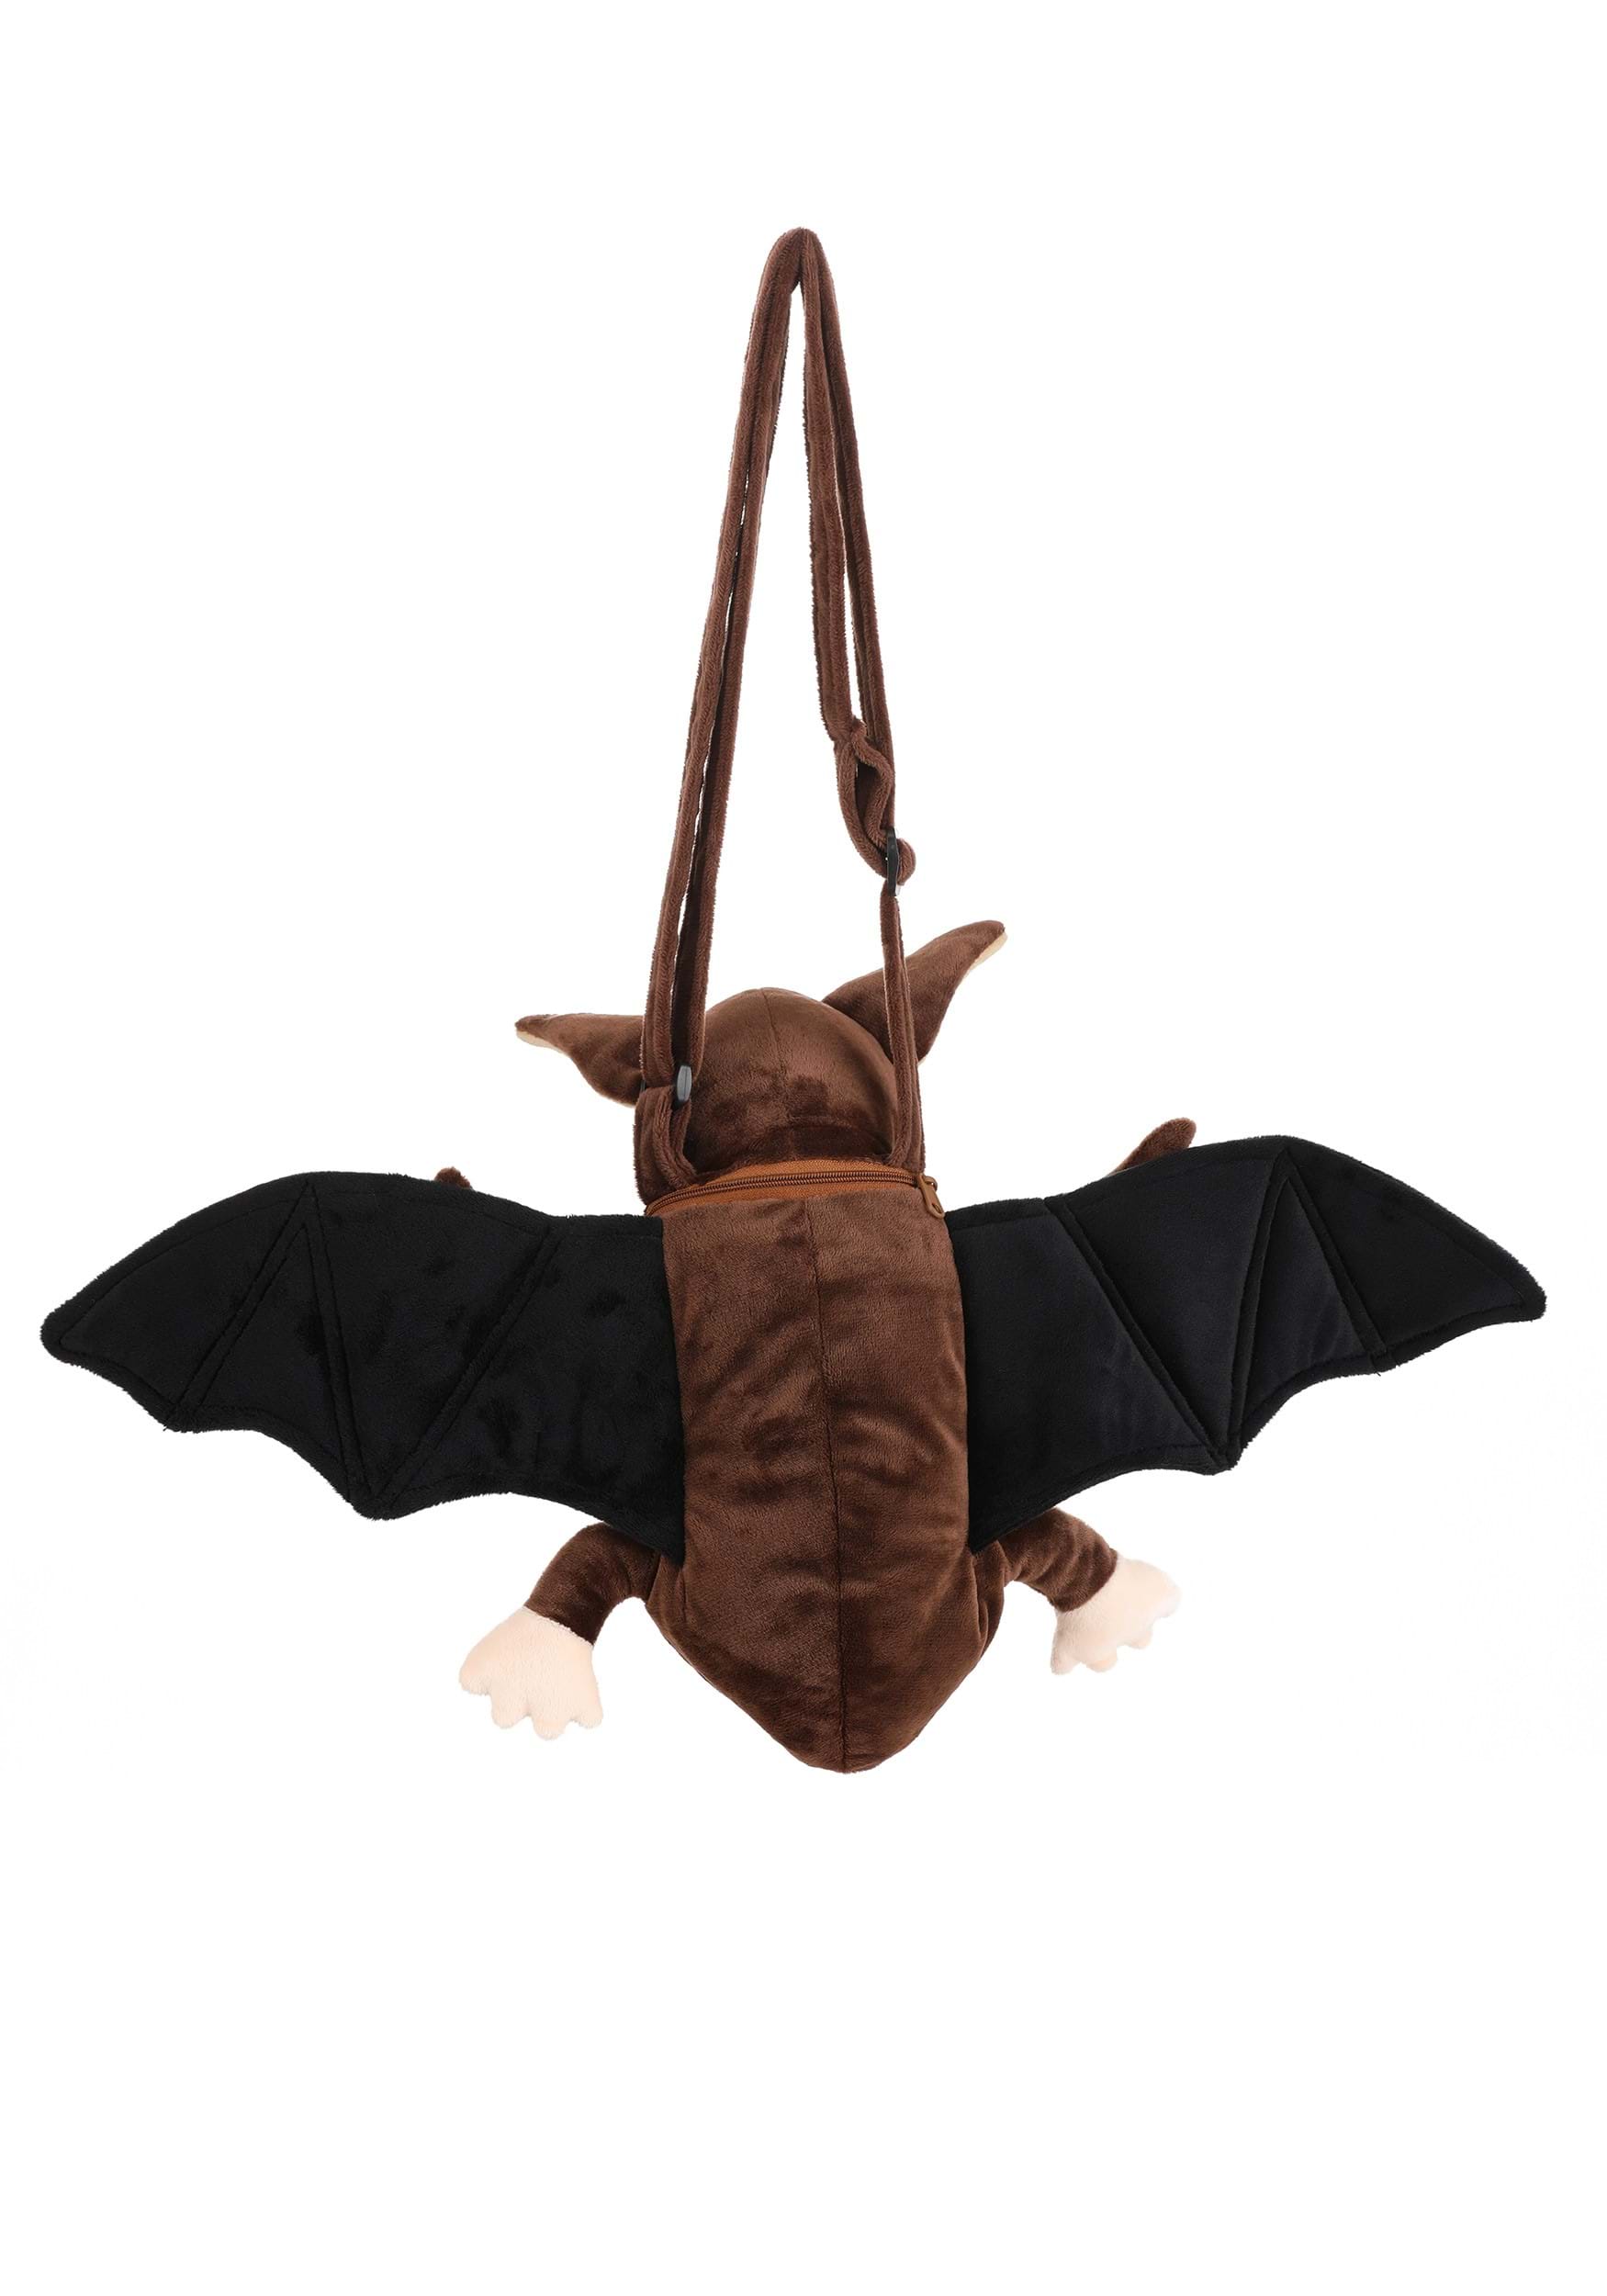 Bat Costume Companion Purse